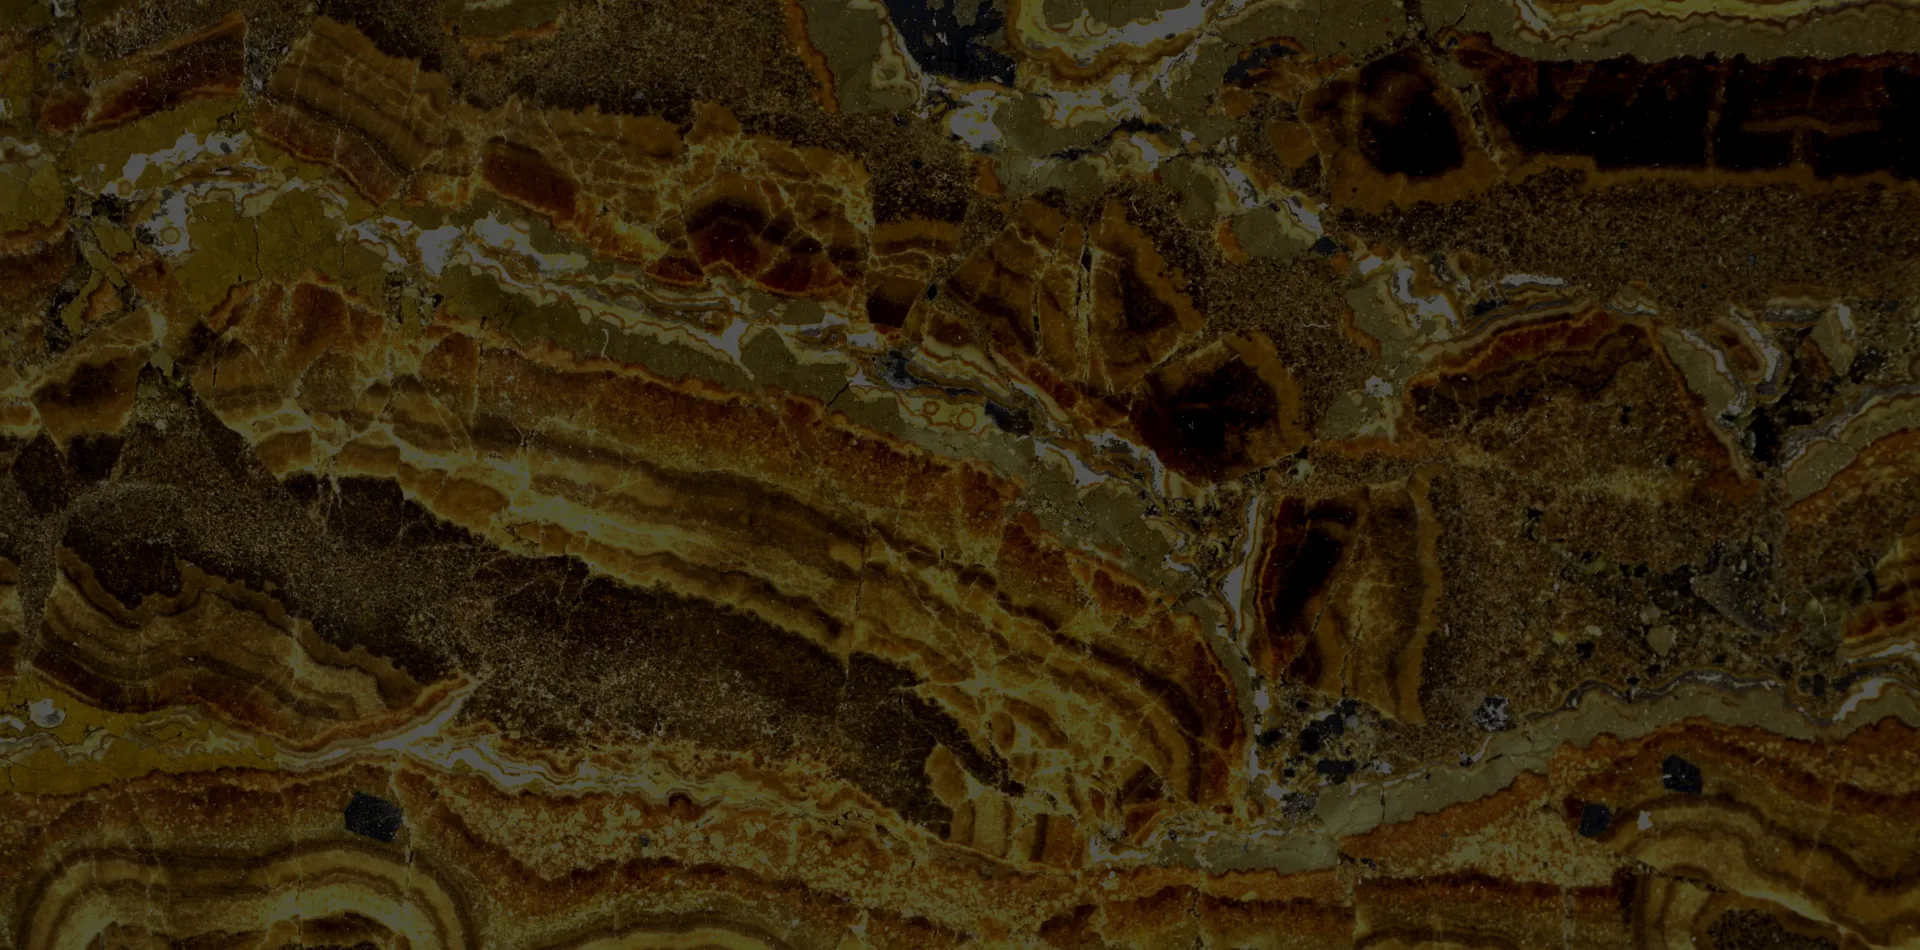 Echantillon poli de minerai rubanné de zinc provenant de la mine de Bois-Madame (Gard, 1982).